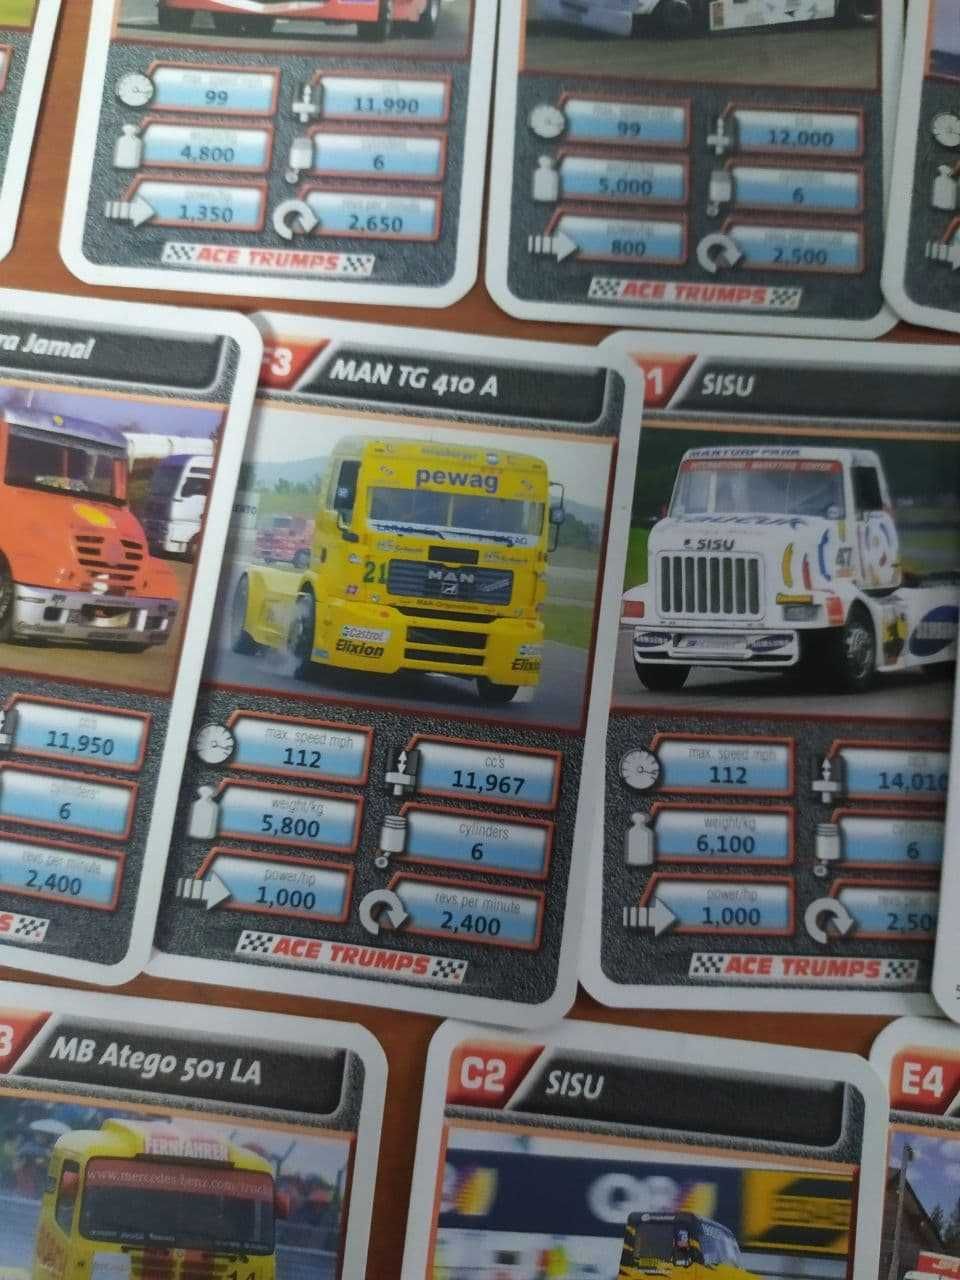 карточки ACE TRUMP  Racing Trucks